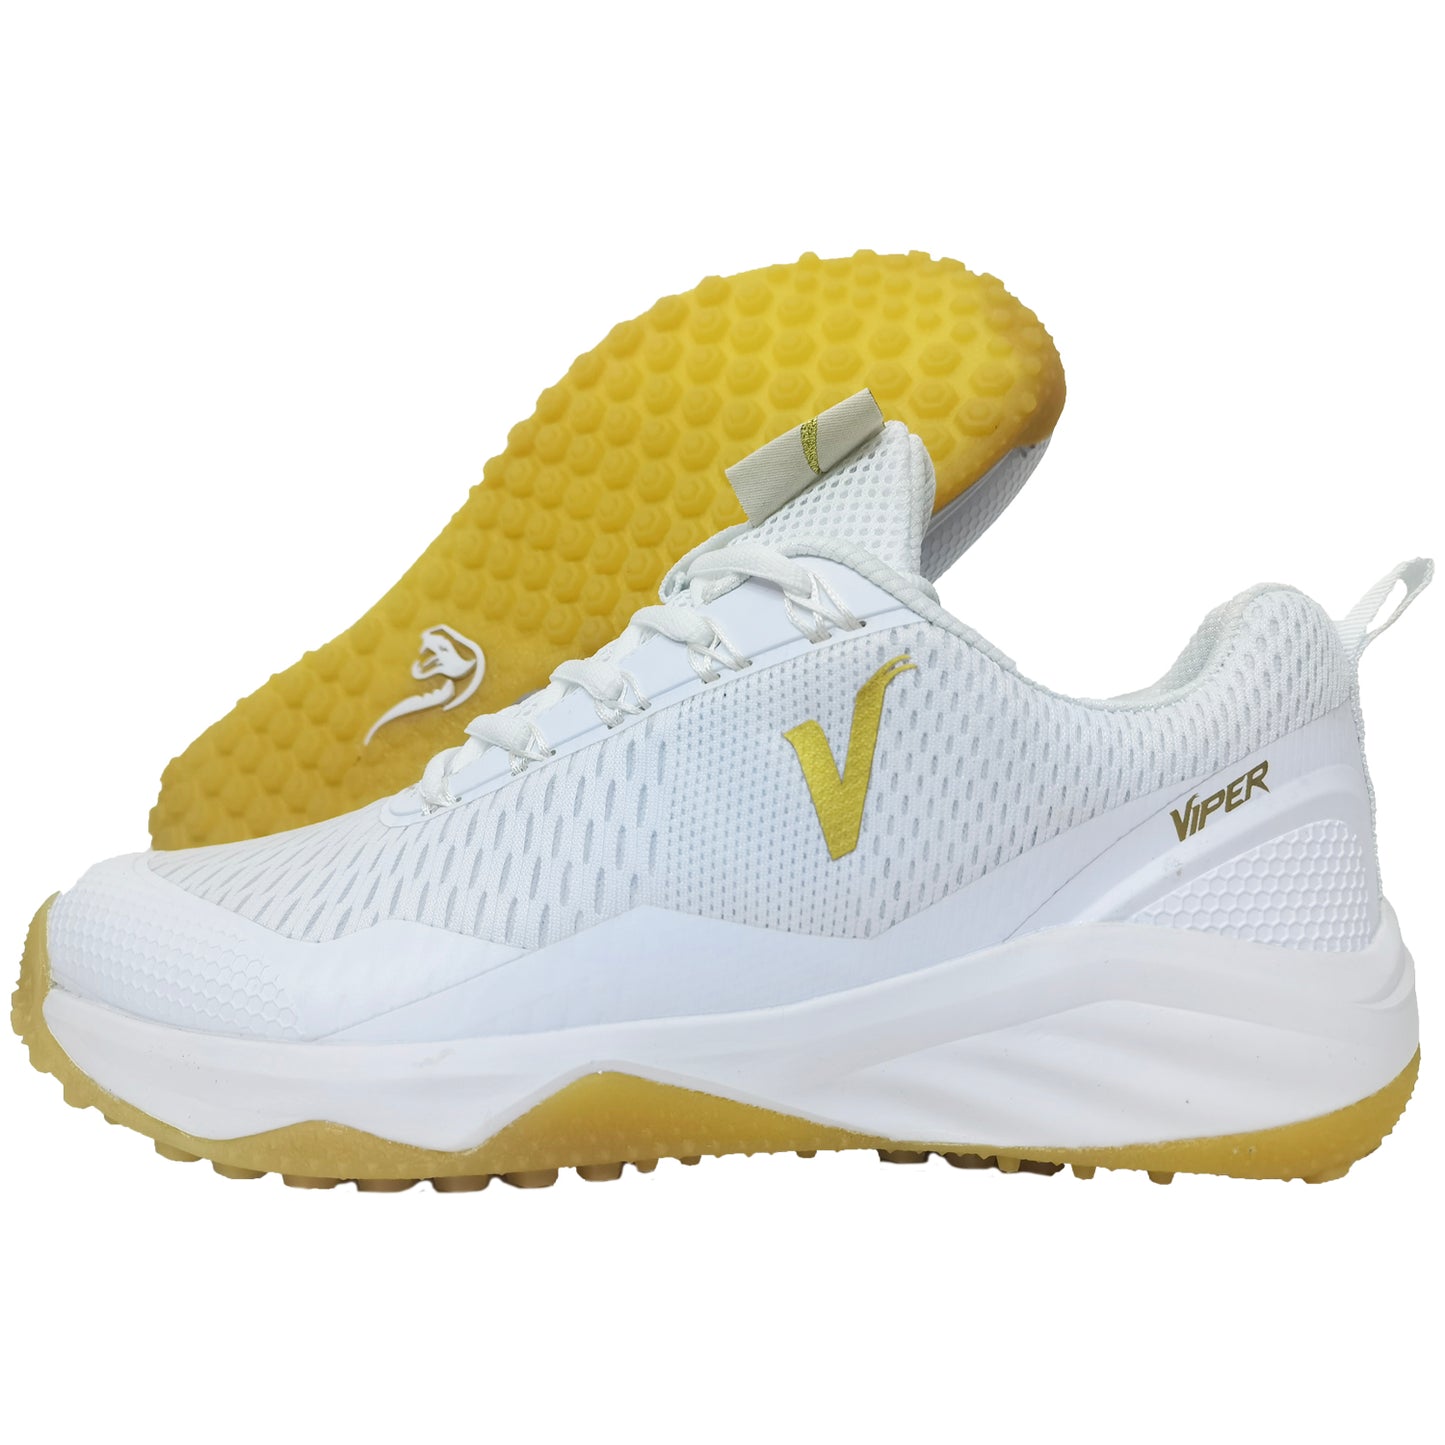 Viper Ultralight Turf Shoe (White/Gold)